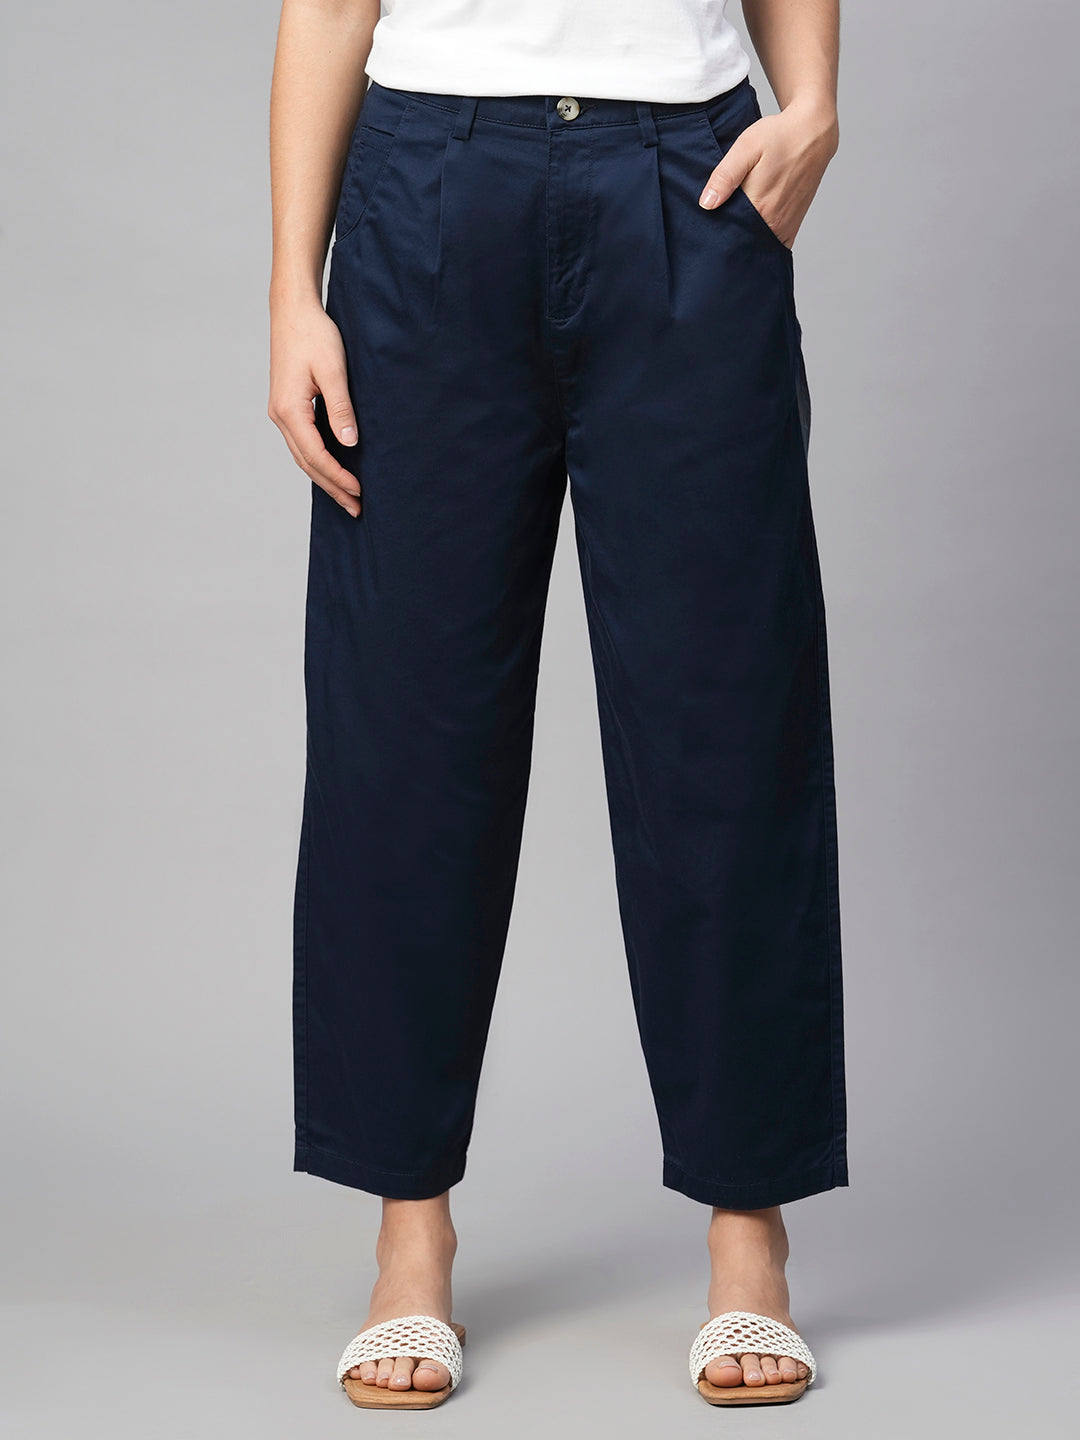 Women's Navy Cotton Elastane Loose Fit Pant